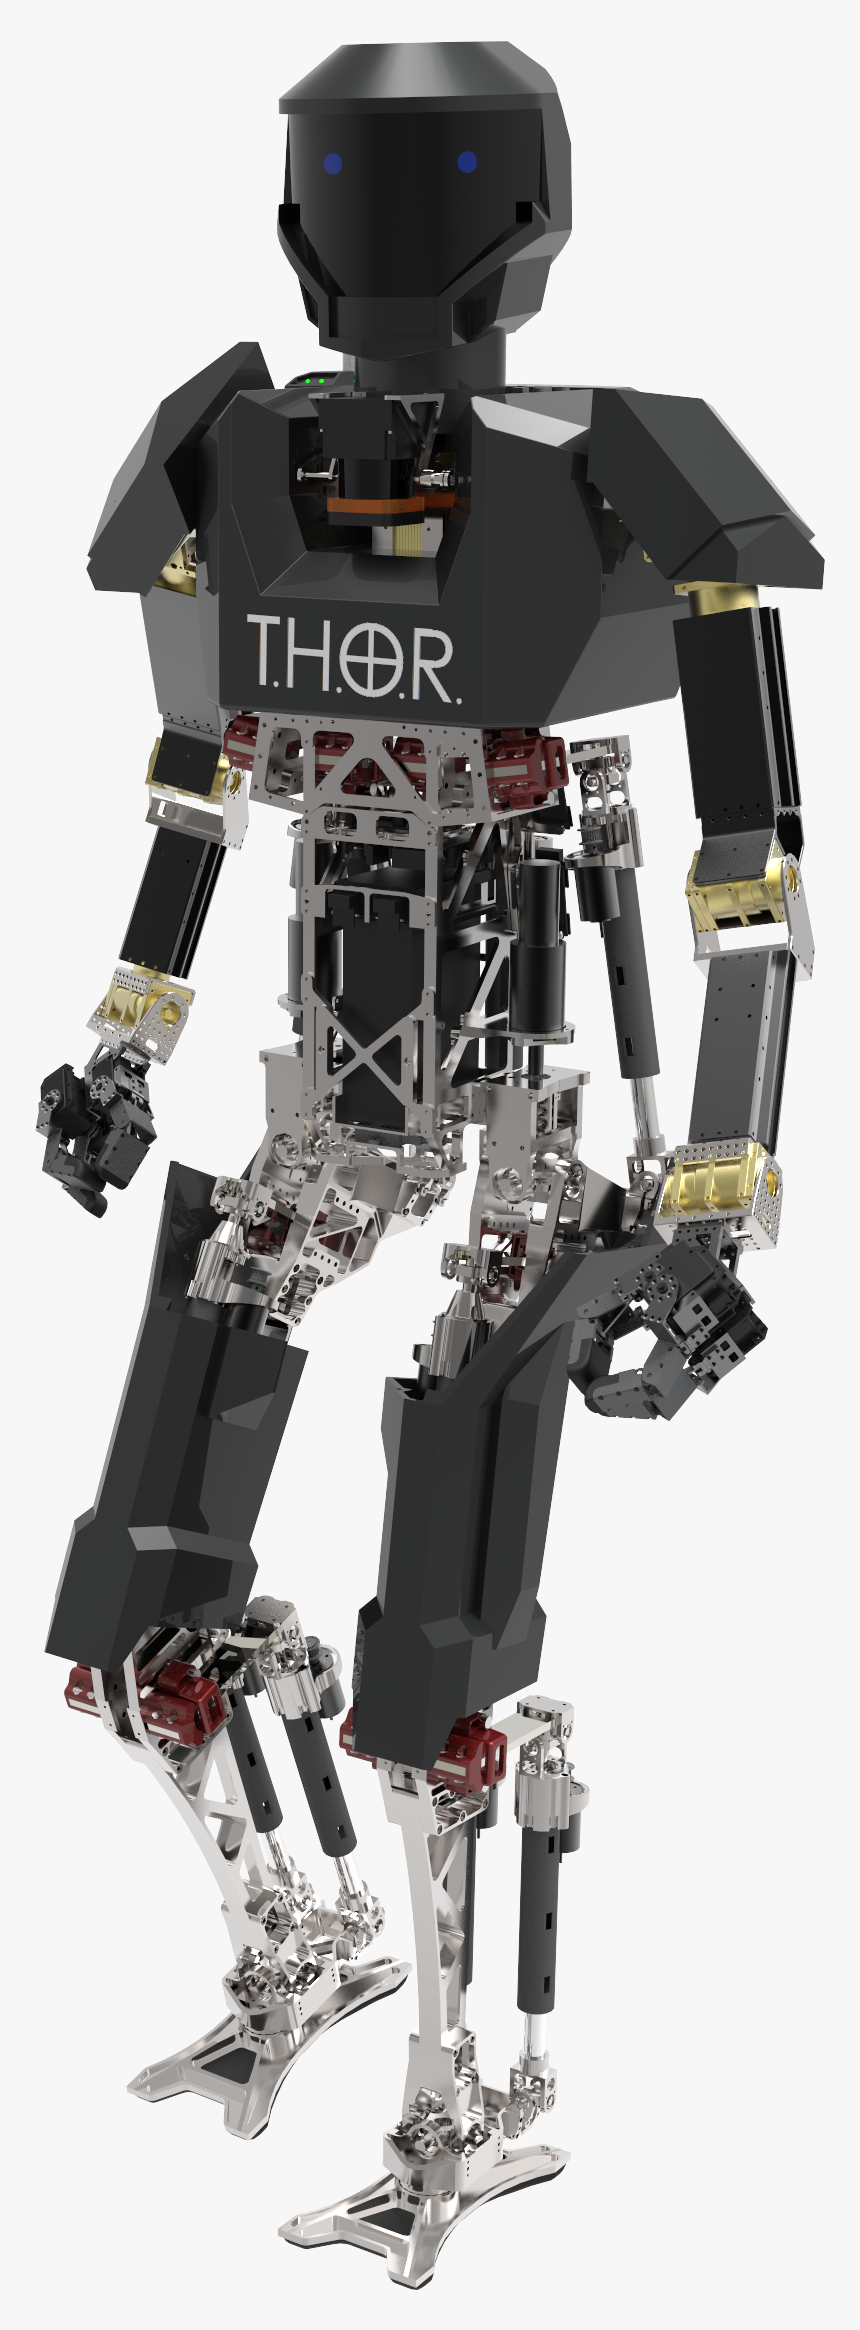 Virginia Tech"s Thor Robot - Darpa Robotics, HD Png Download, Free Download